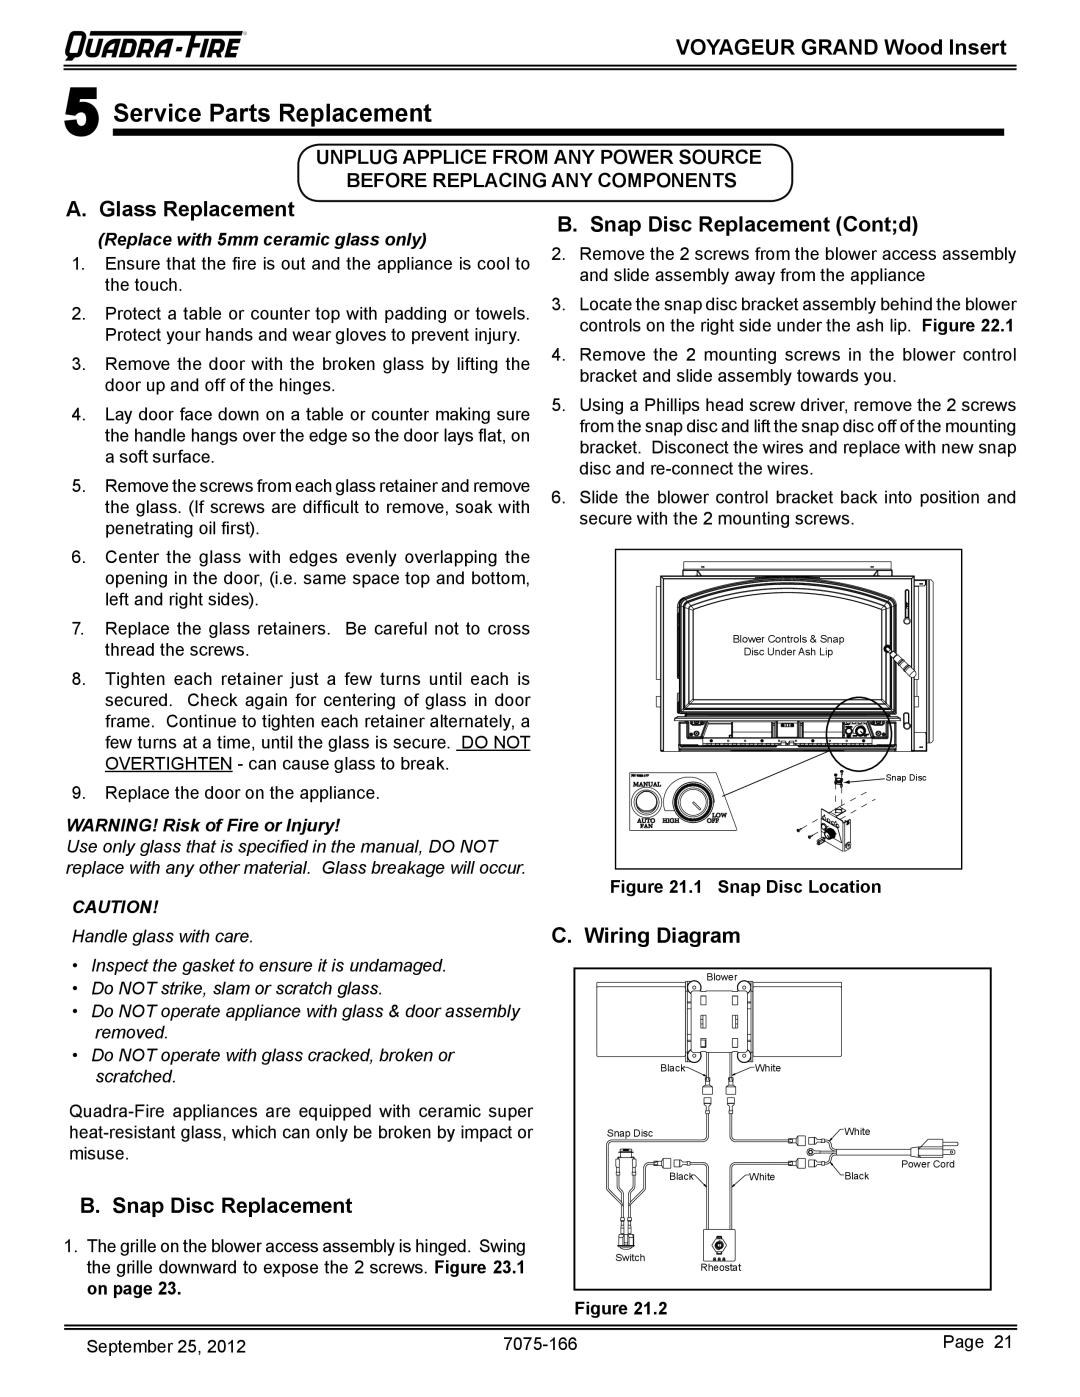 Radware VOYA-GRAND-PMH Service Parts Replacement, A. Glass Replacement, B. Snap Disc Replacement Contd, C. Wiring Diagram 